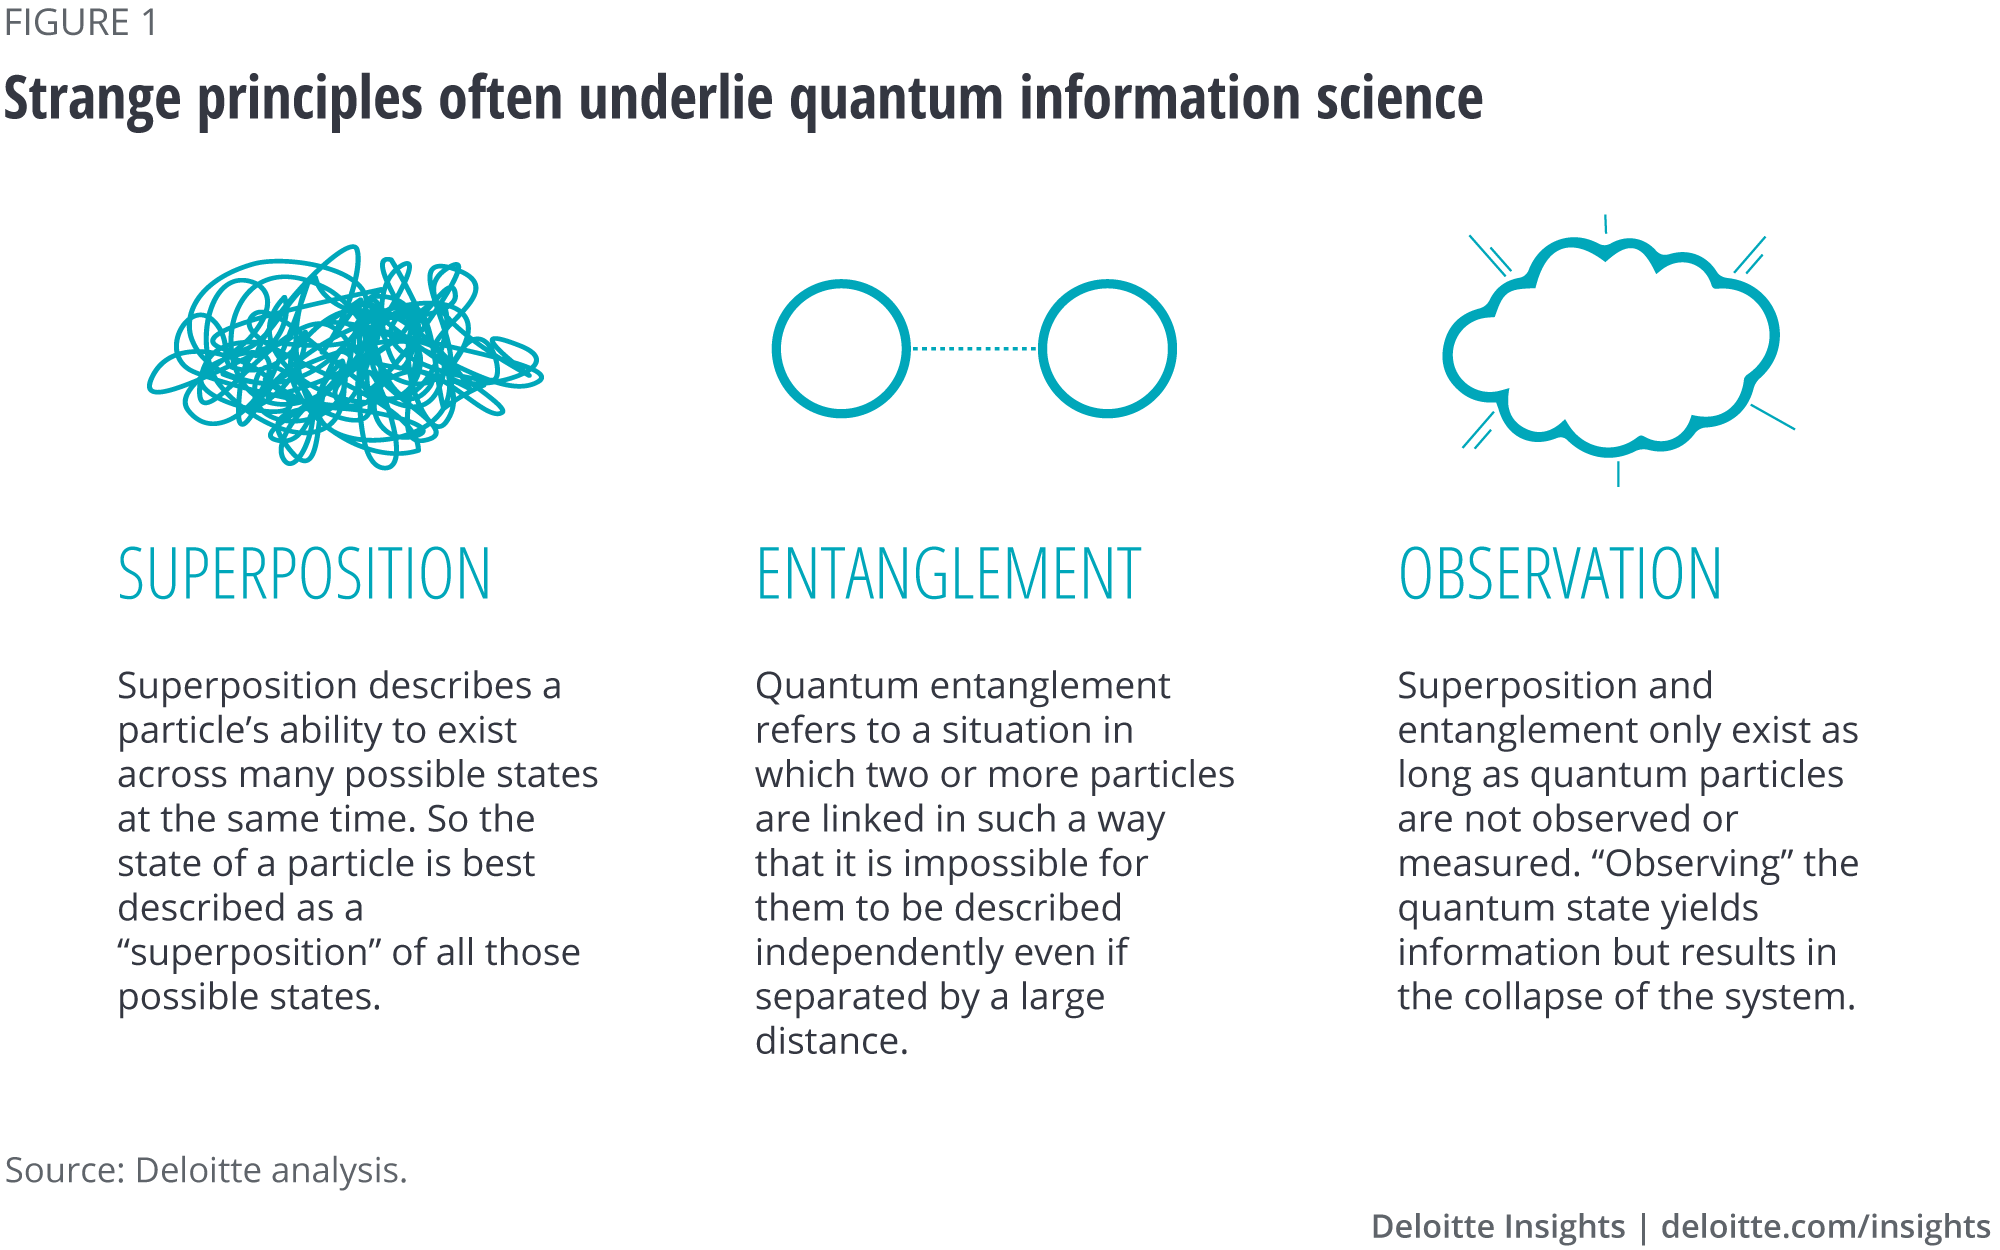 Often-strange principles underlie quantum information science